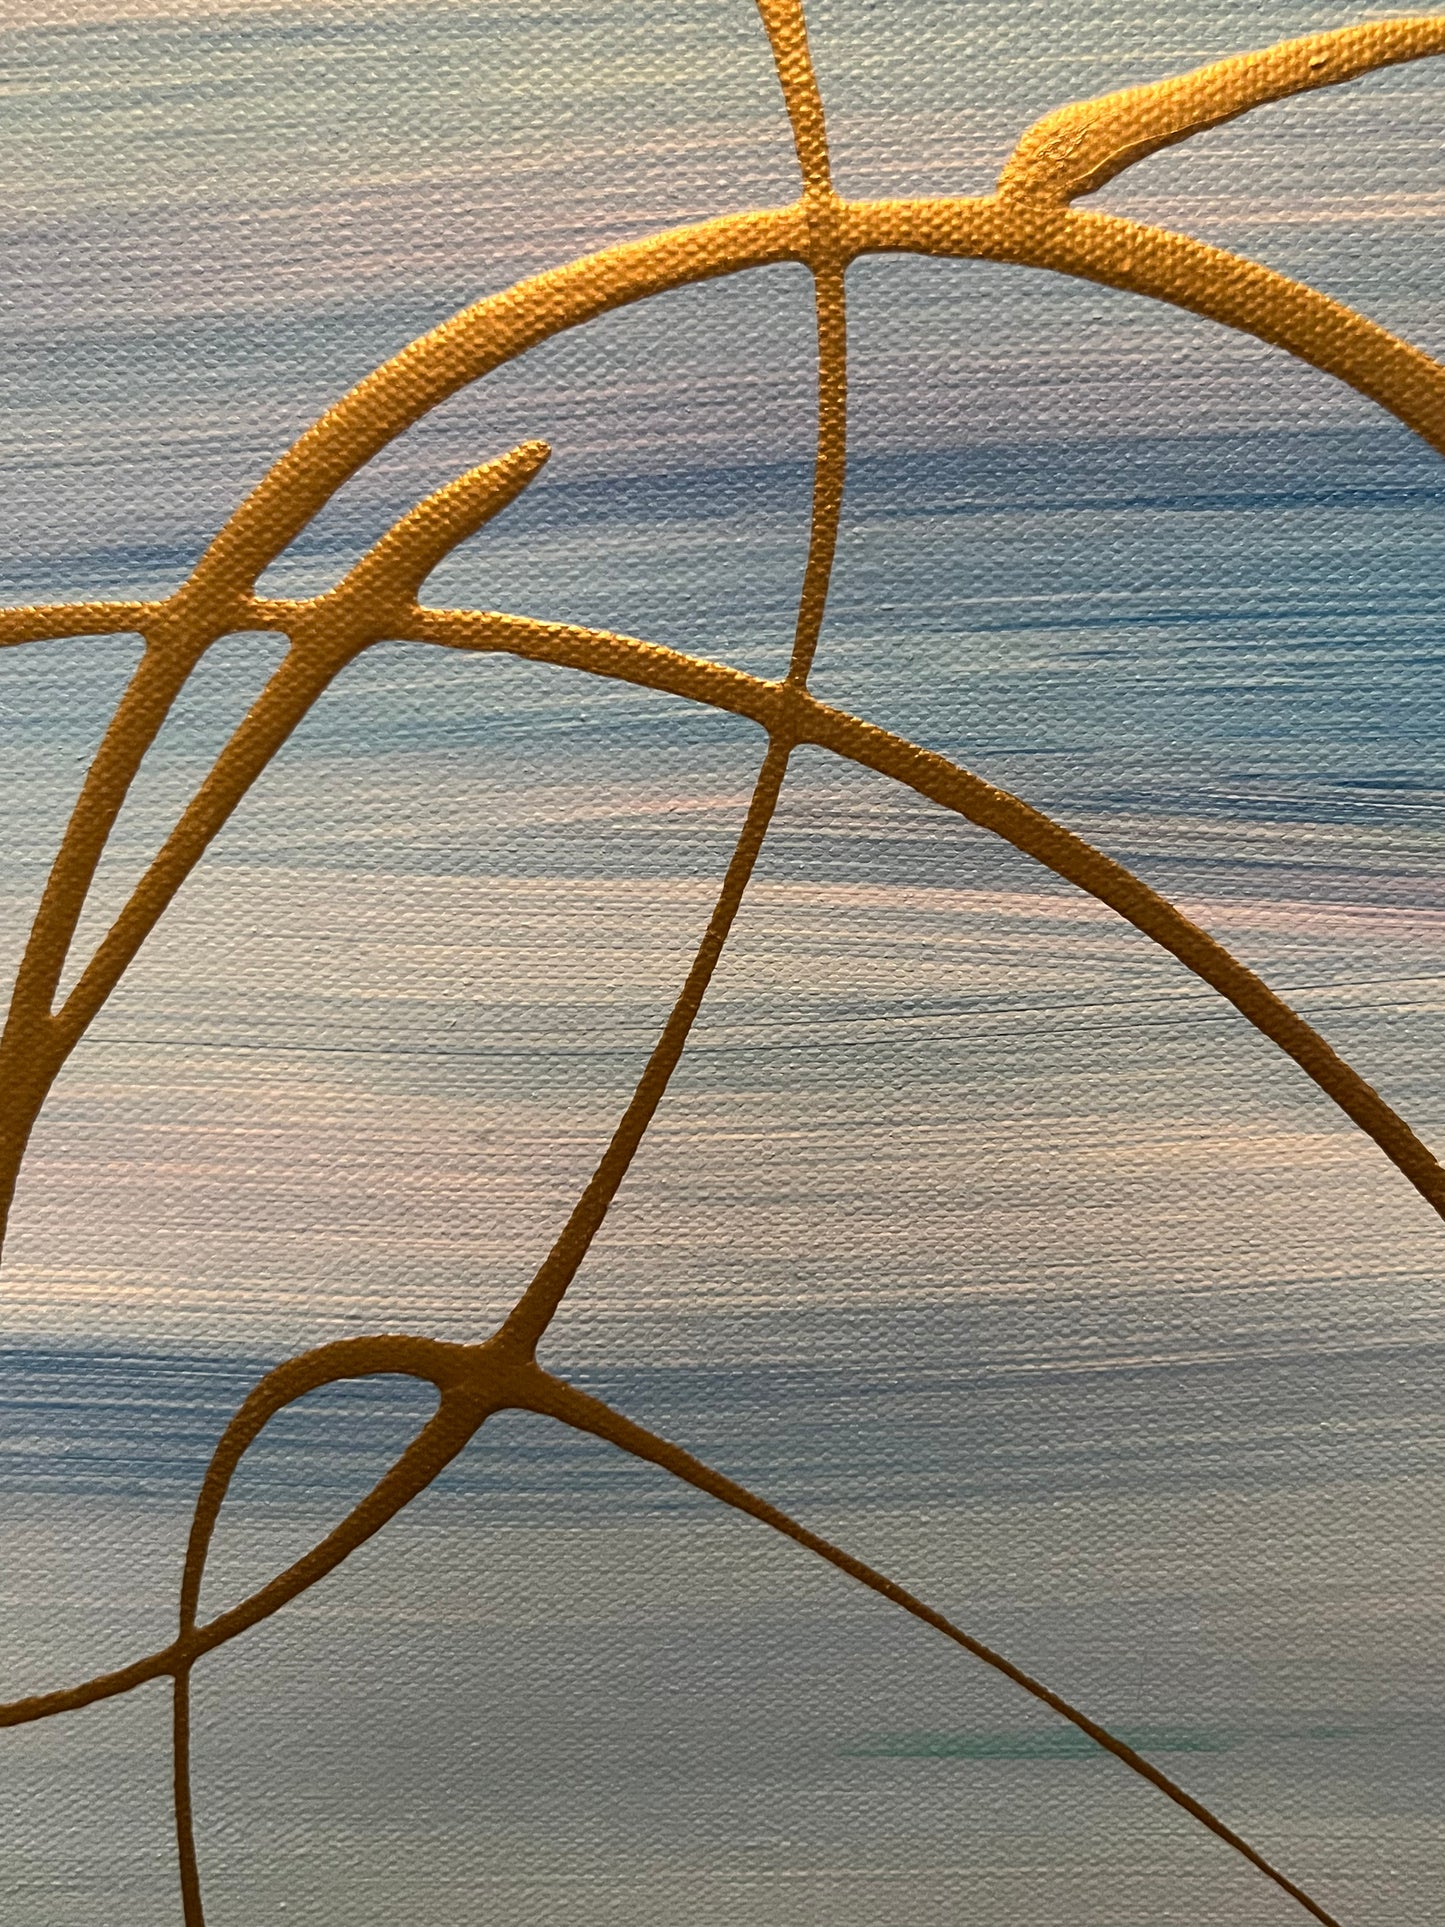 Pastel – Acrylic on Canvas